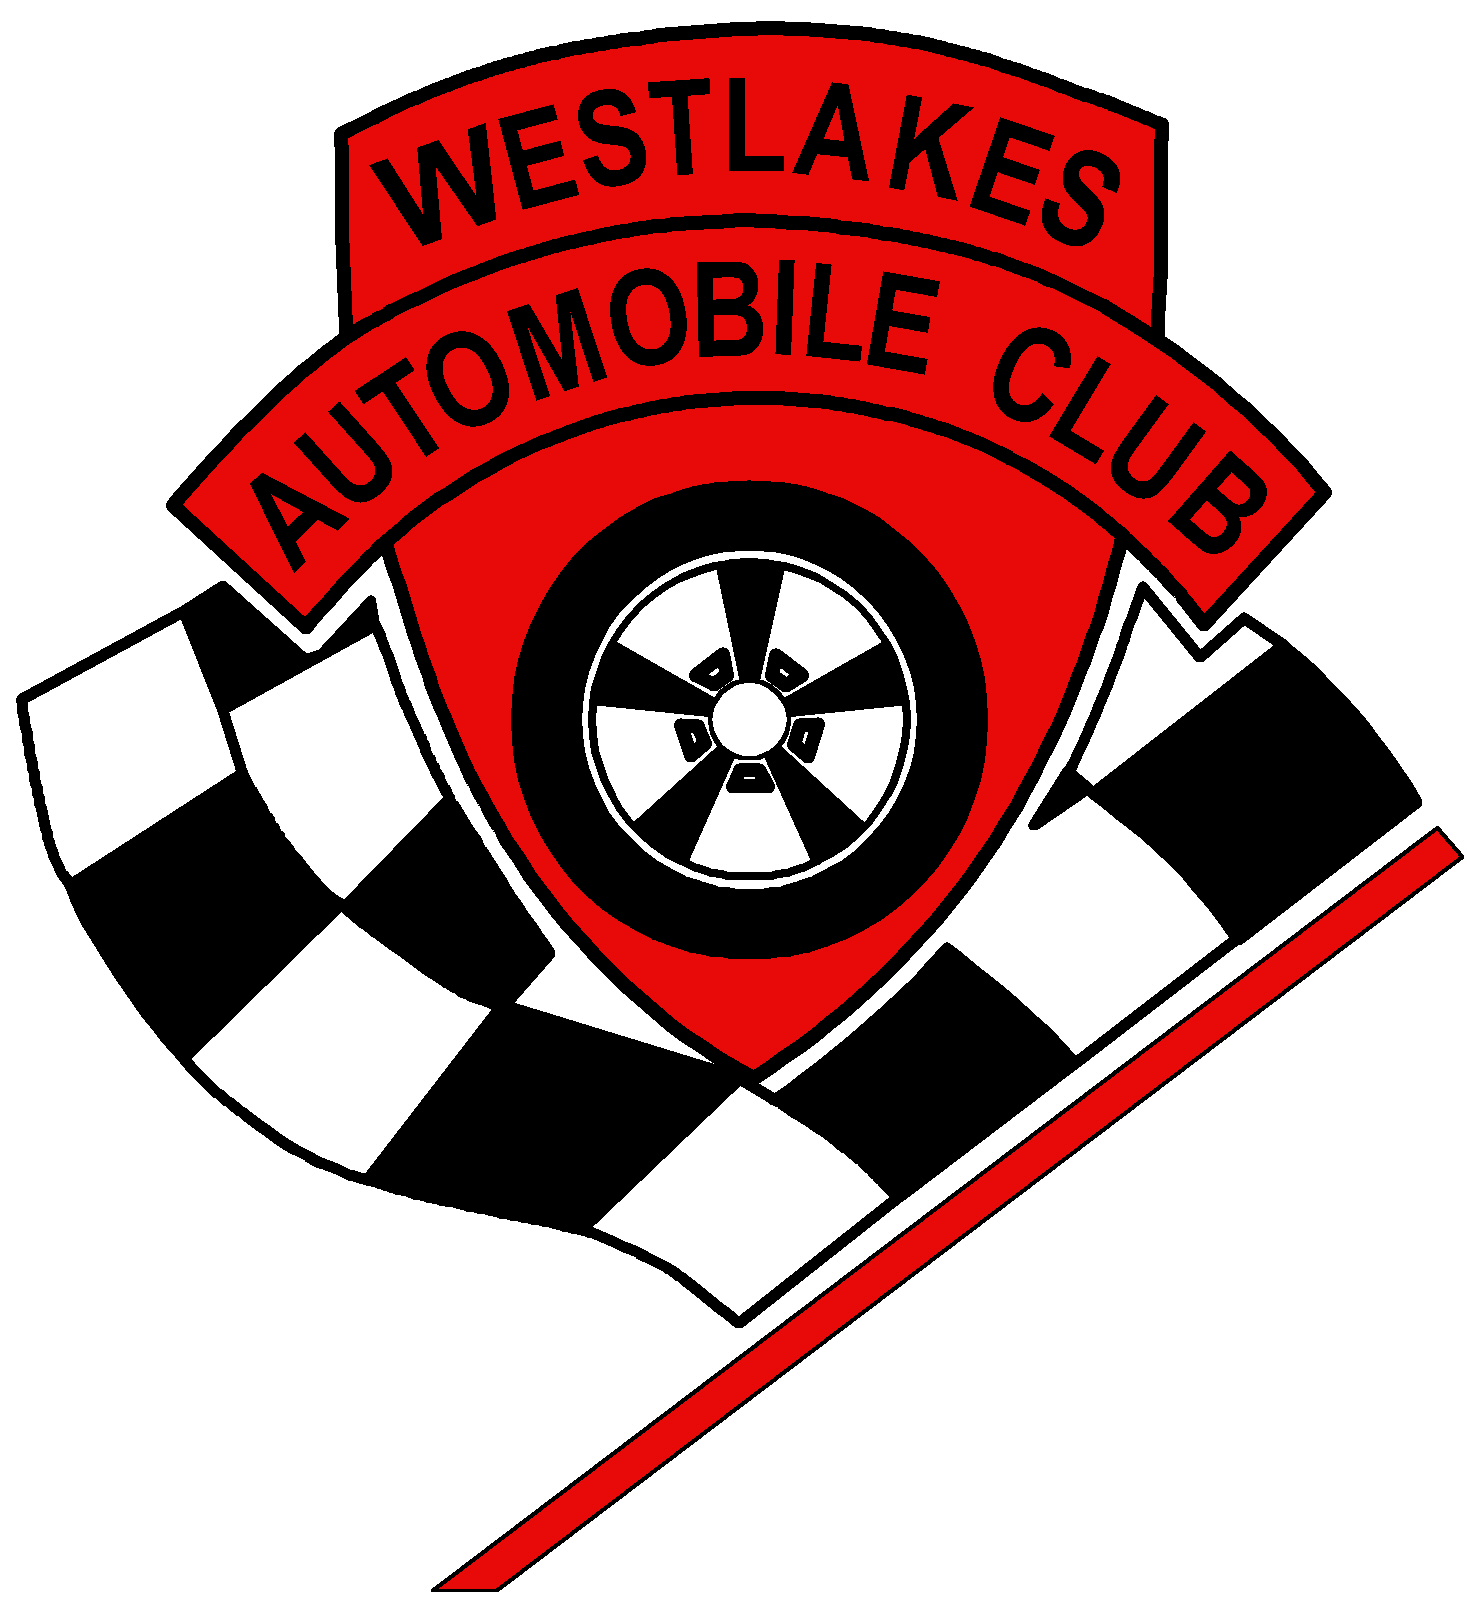 Westlakes Automobile Club « Snake Racing.